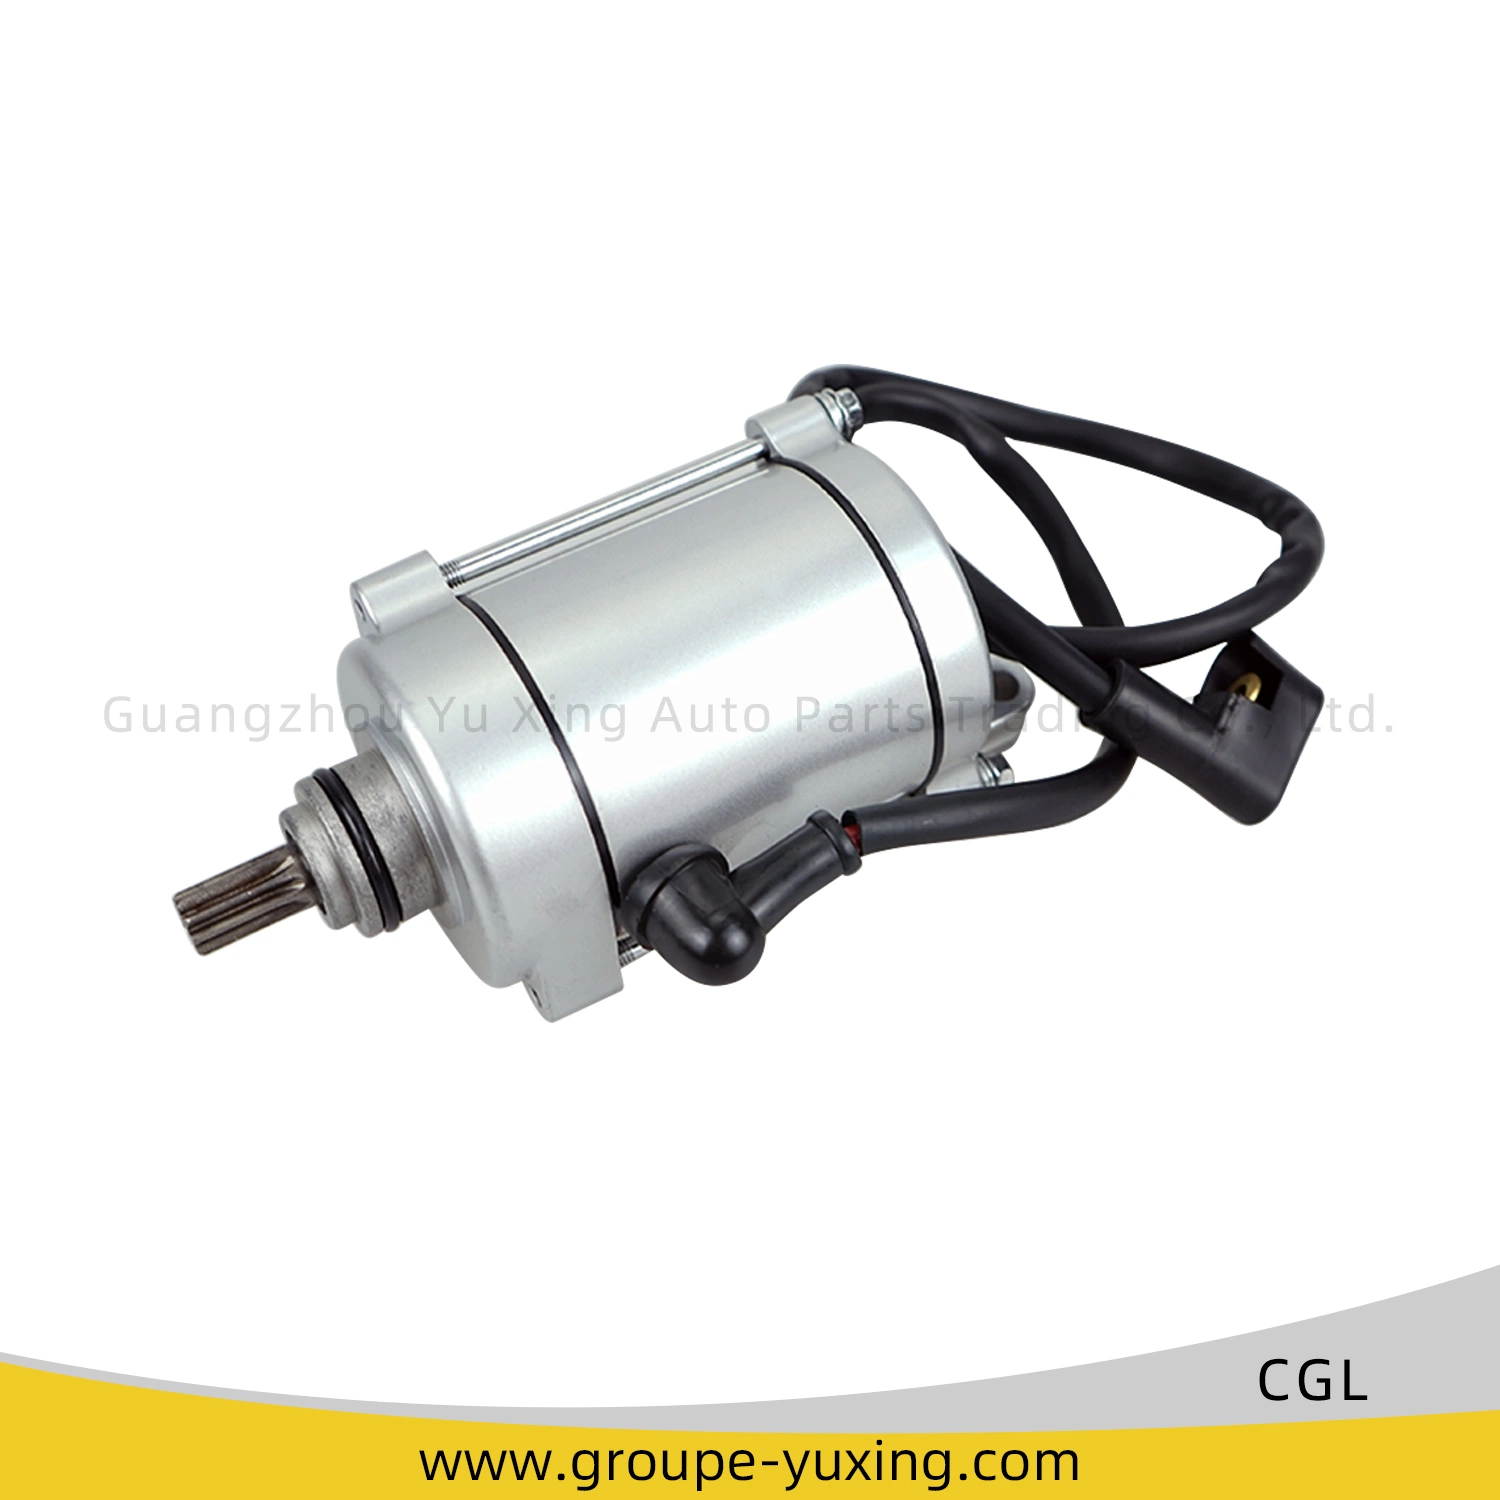 Cgl Motorcycle Engine Parts Starter Motor